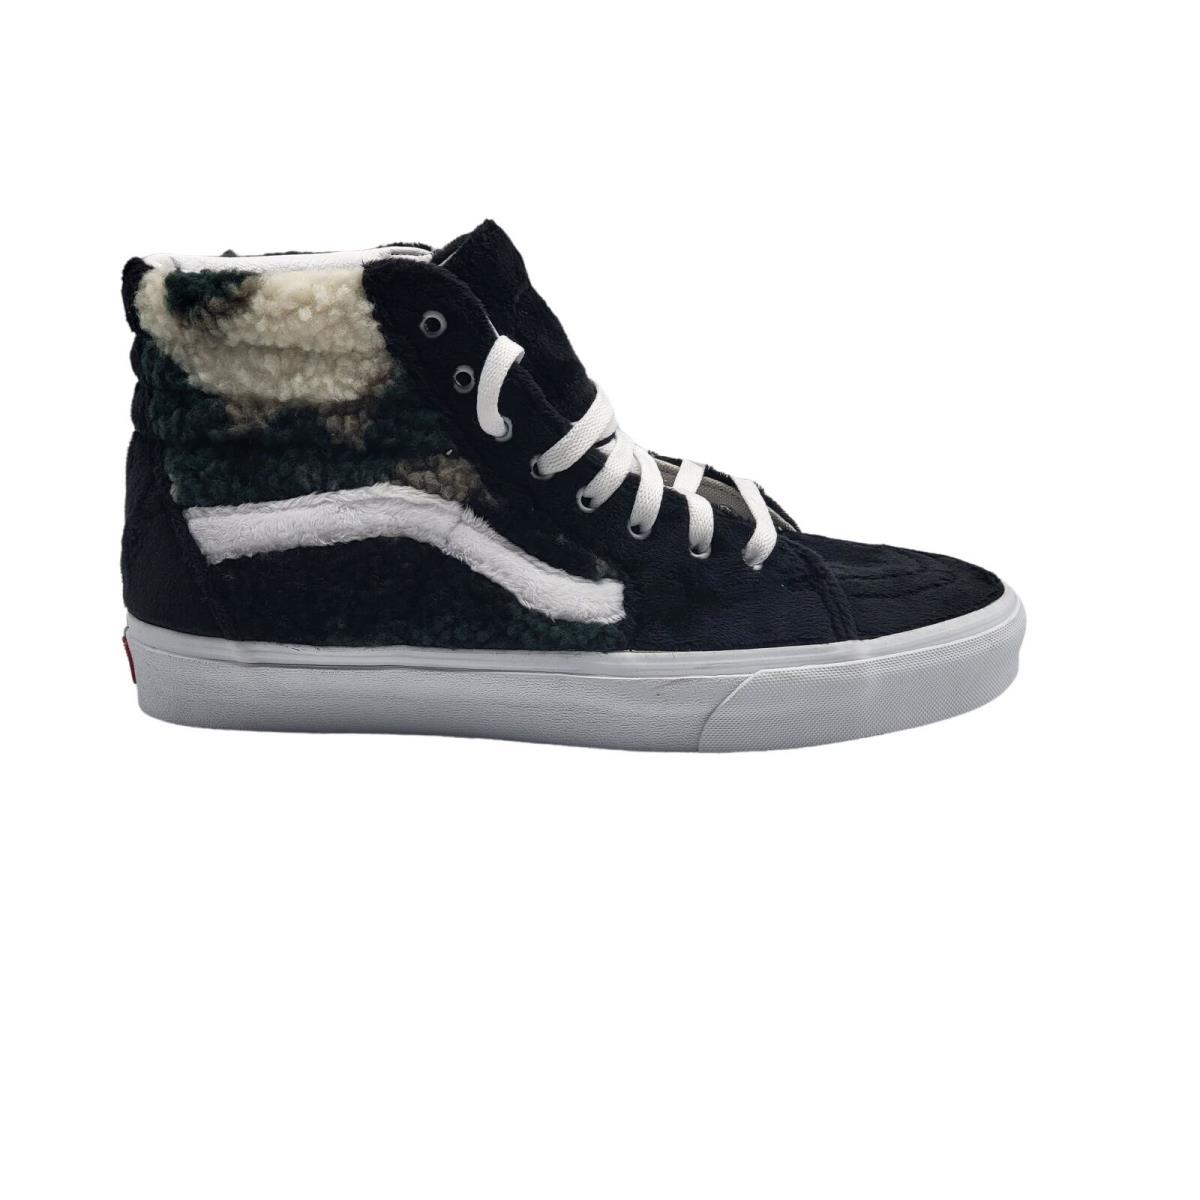 Vans Sherpa Sk8-Hi Camo Black Shoes Size 11